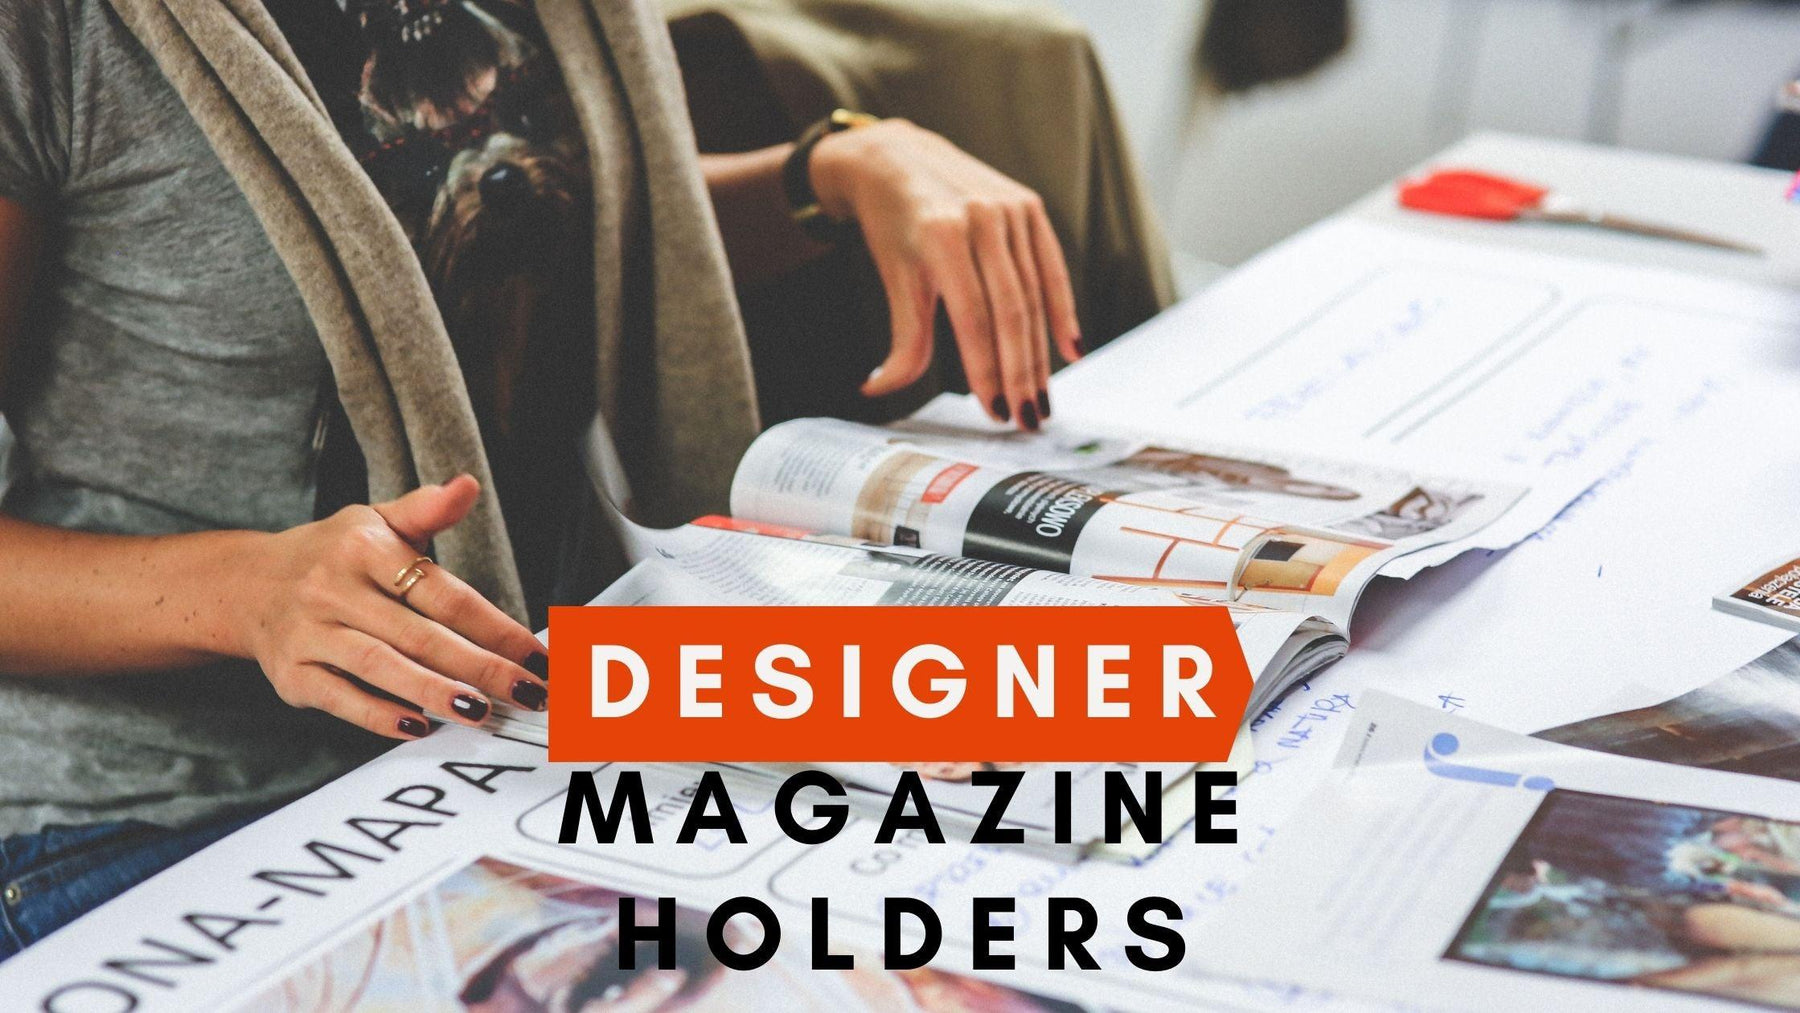 Designer Magazine Holders for Décor - WoodenTwist